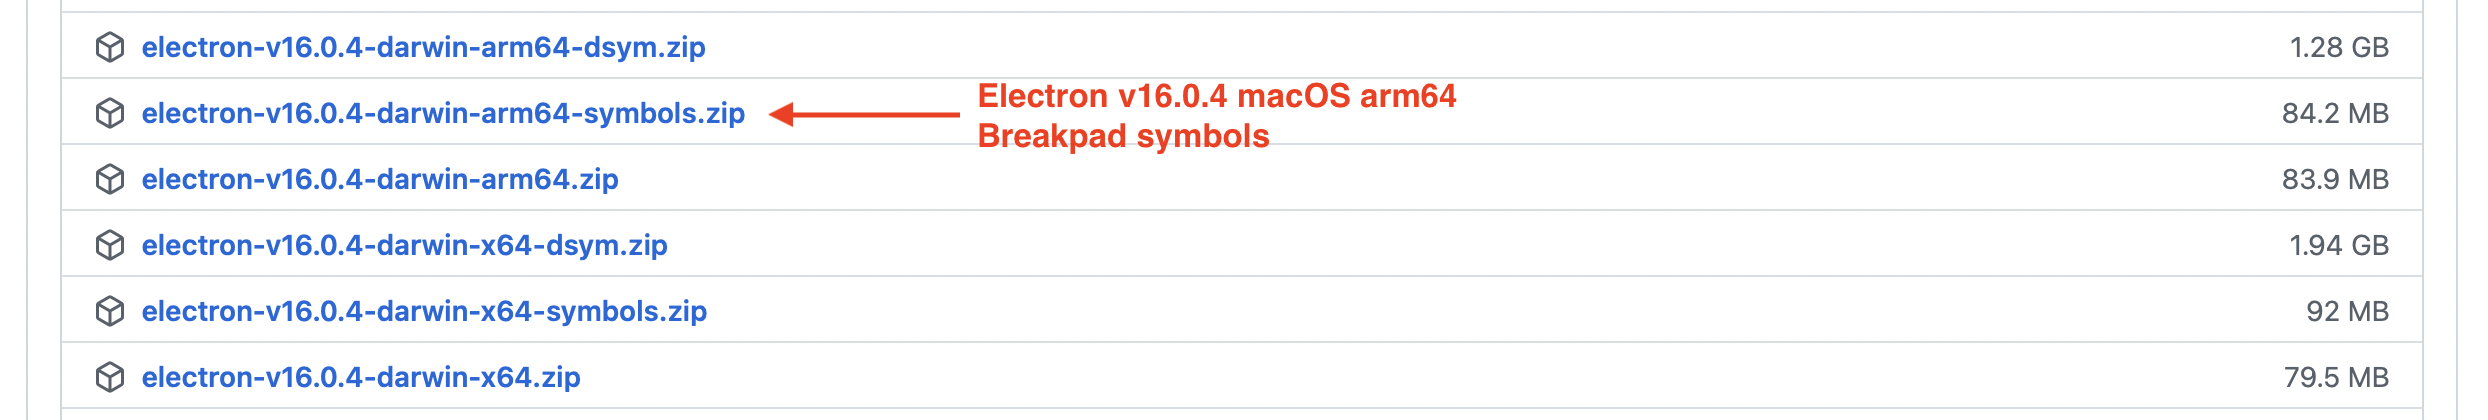 Electron v16.0.4 macOS arm64 official Breakpad symbols